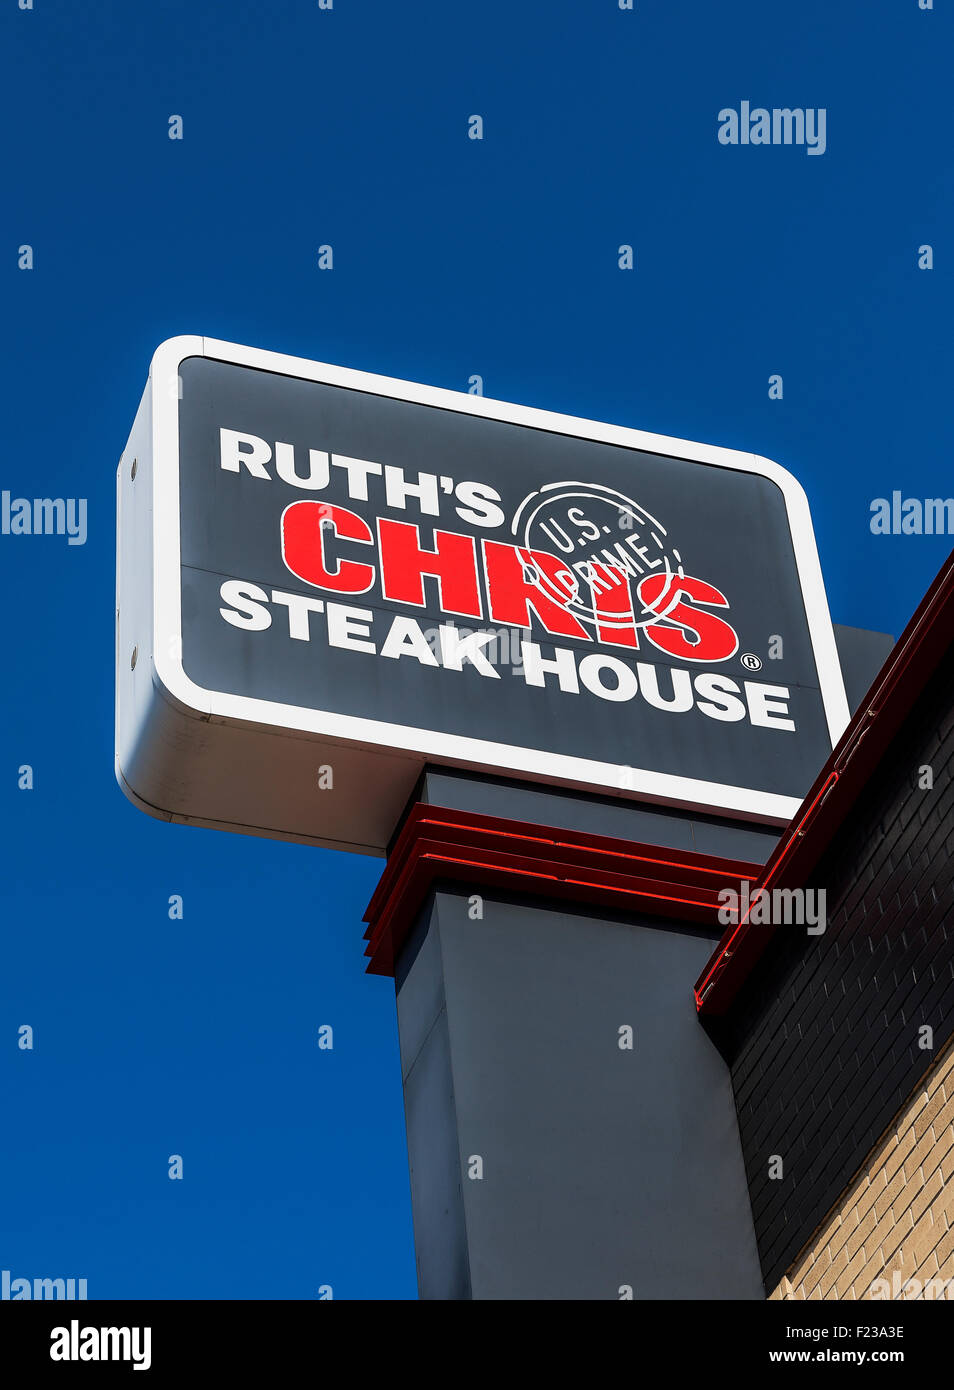 Ruth's Chris Steak House, segno e logo. Foto Stock